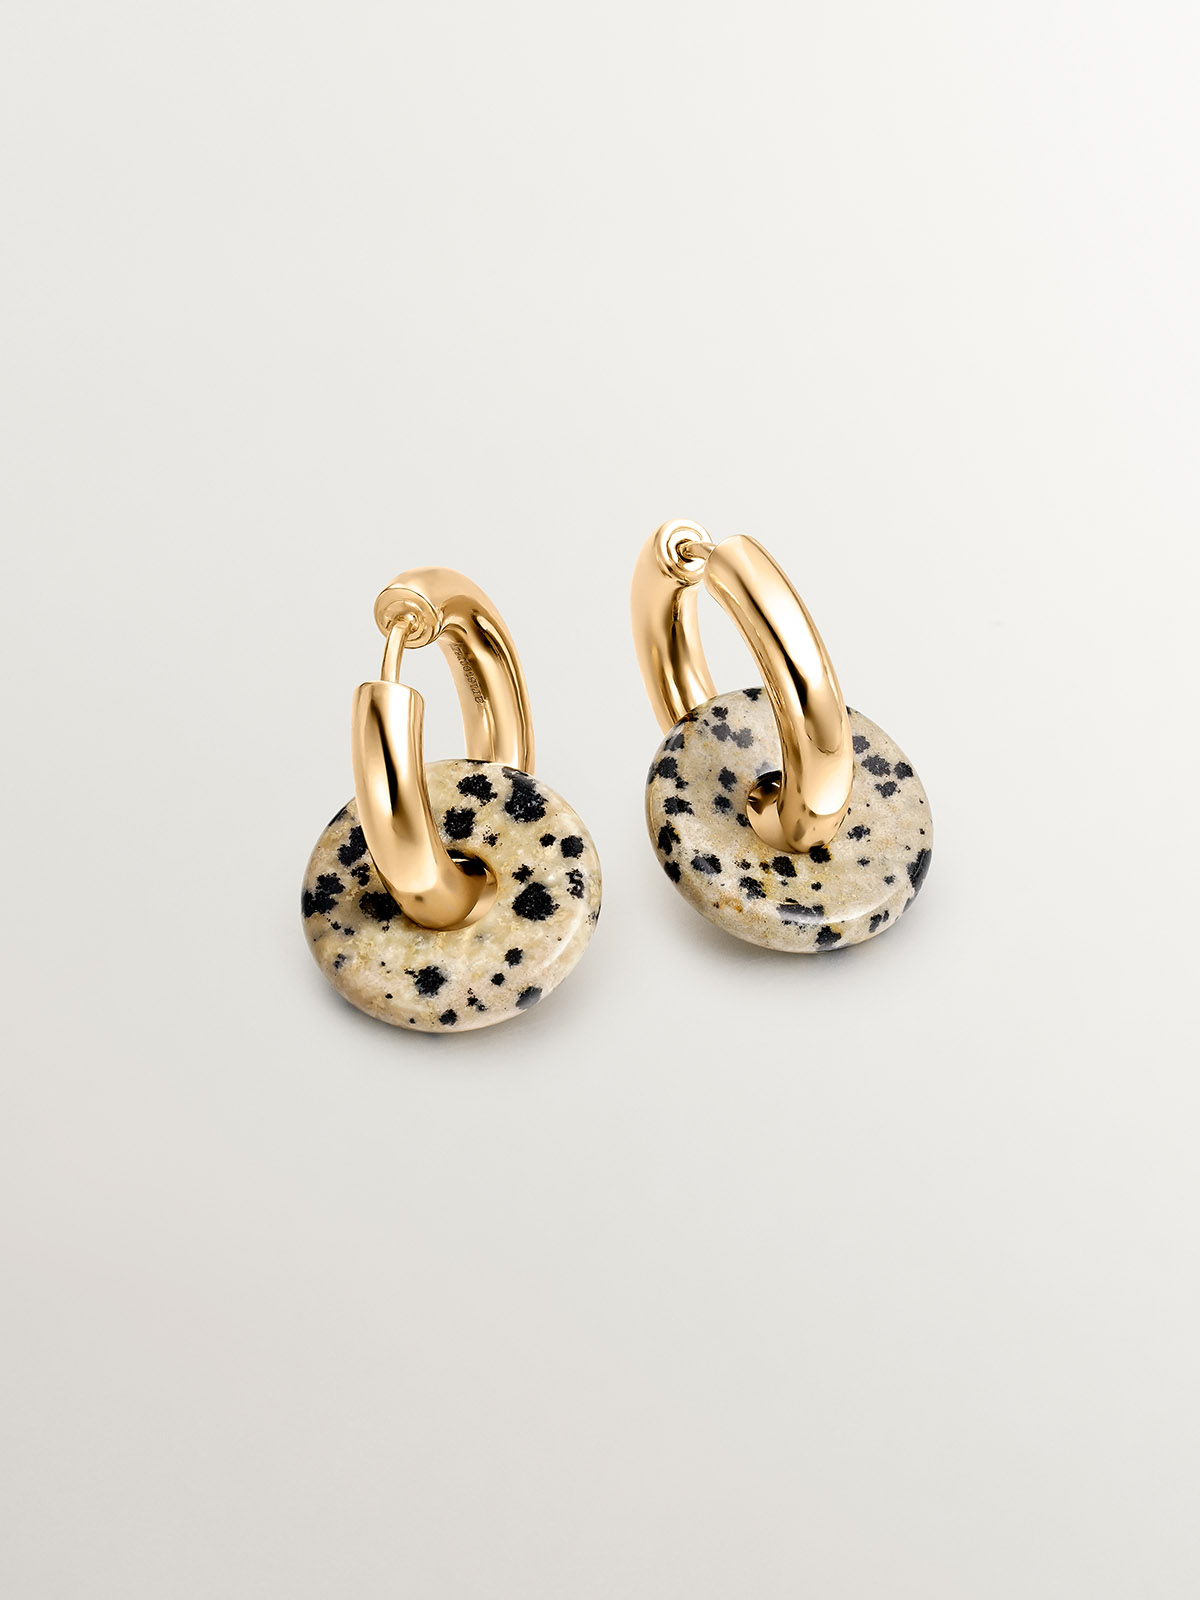 925 sterling silver medium hoop earrings with 18K yellow gold plating featuring dalmatian jasper.